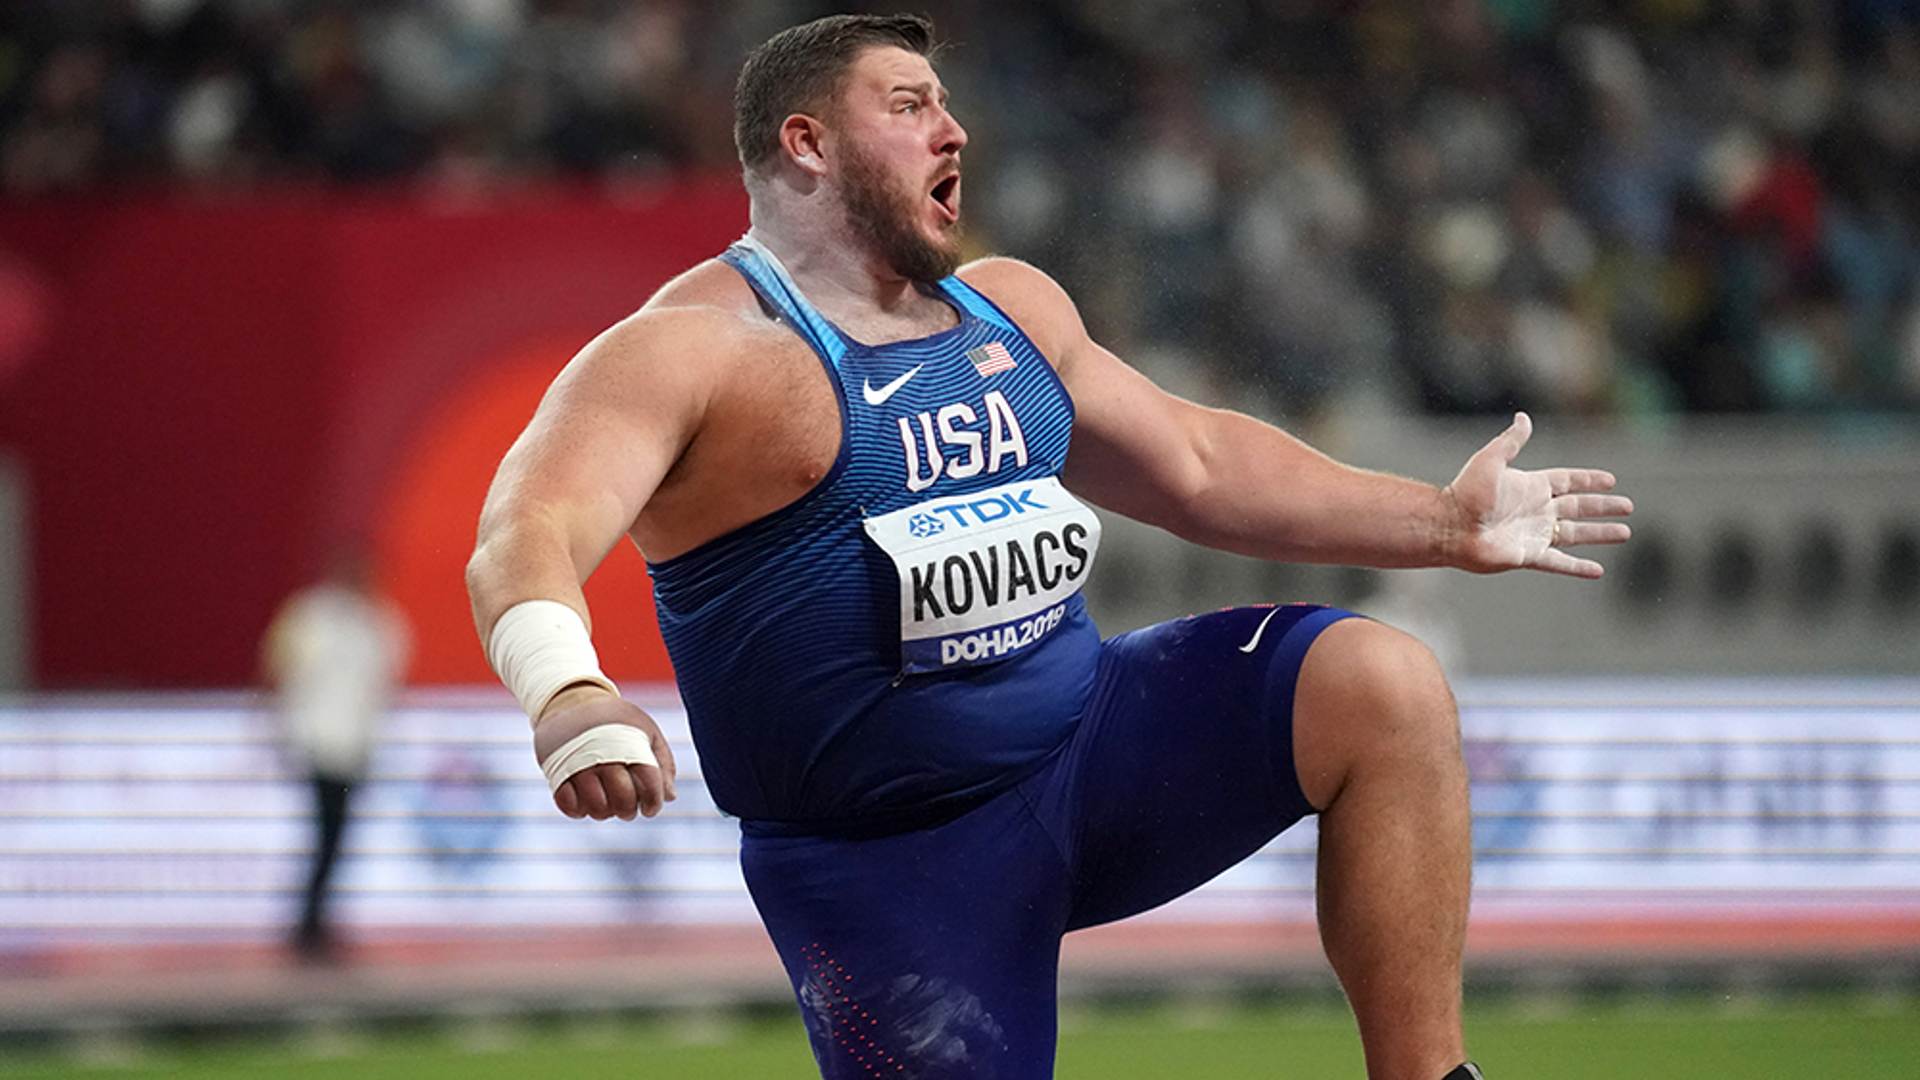 Joe Kovacs after his throw at the World Championships 2019 Doha (Kovacs in a file photo; Credits - Twitter)